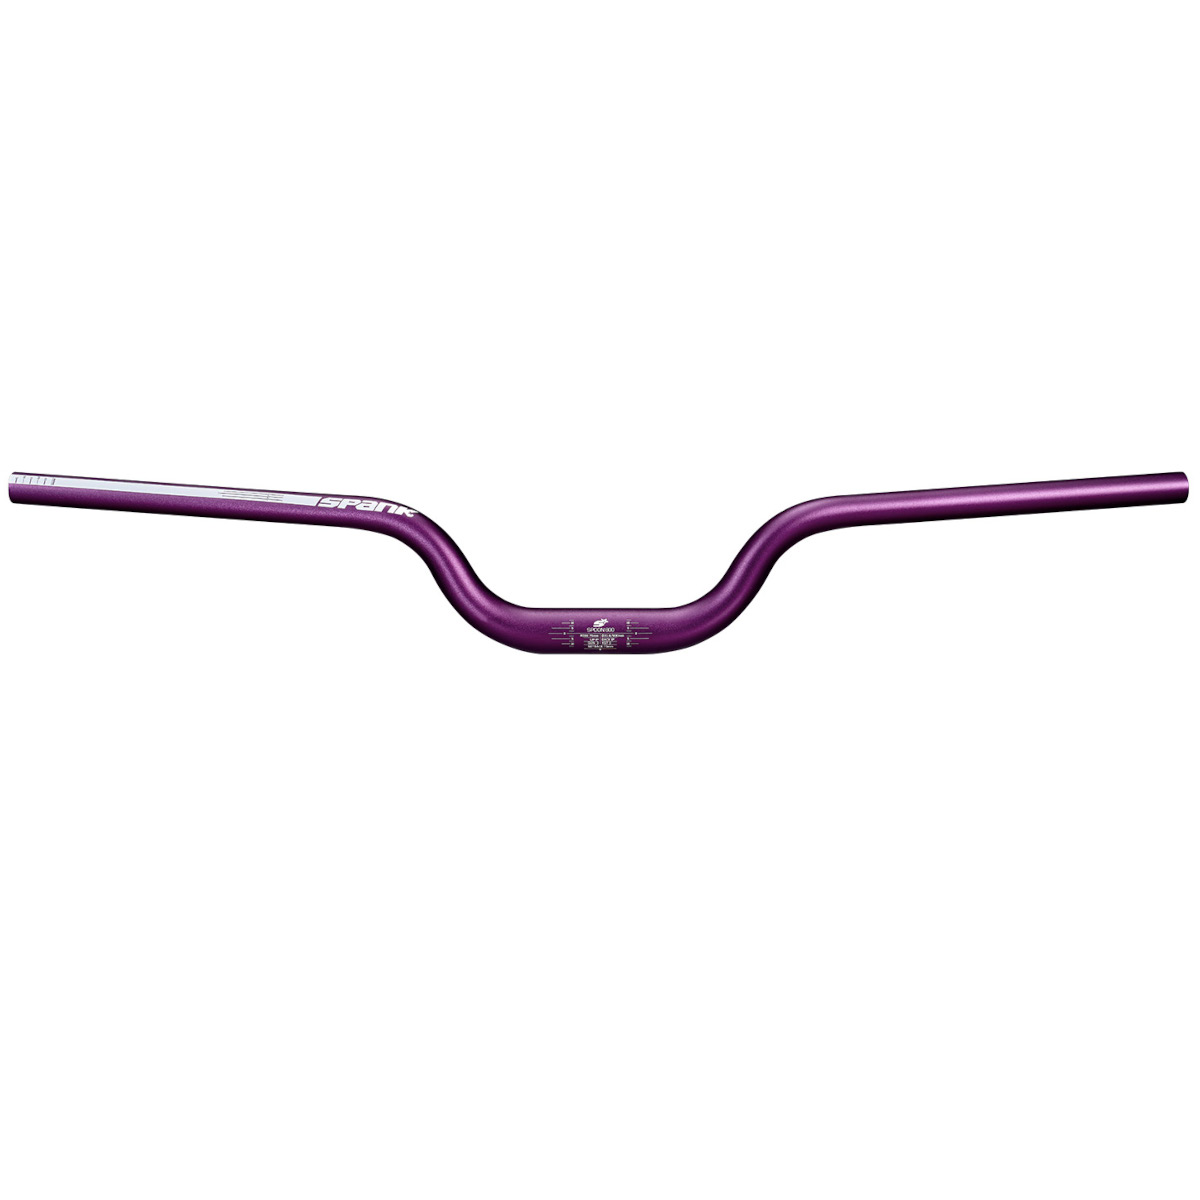 Picture of Spank Spoon 800 MTB Handlebar - purple